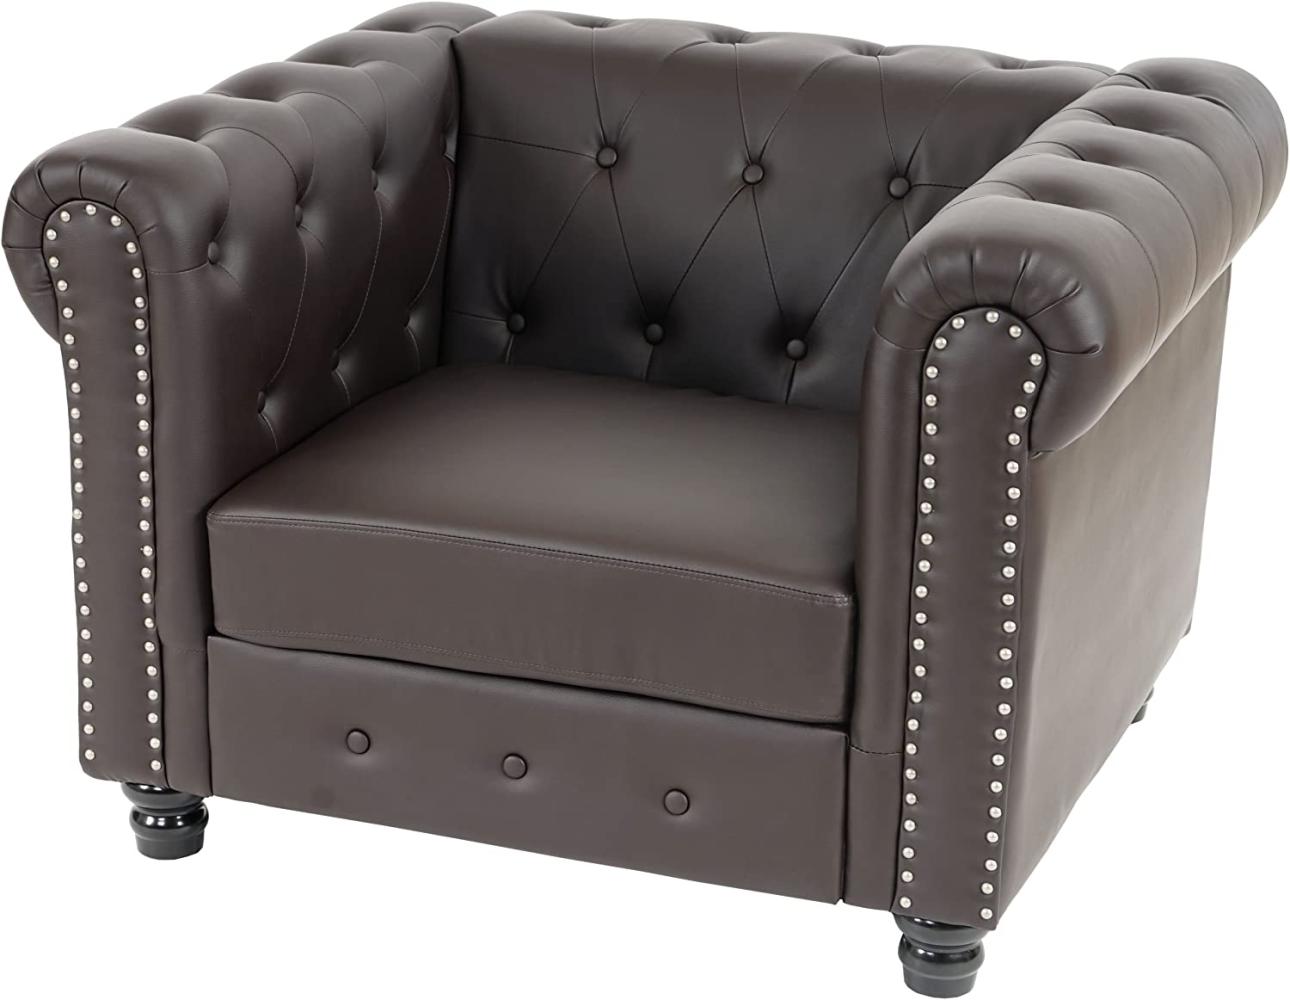 Luxus Sessel Loungesessel Relaxsessel Chesterfield Kunstleder ~ runde Füße, braun Bild 1